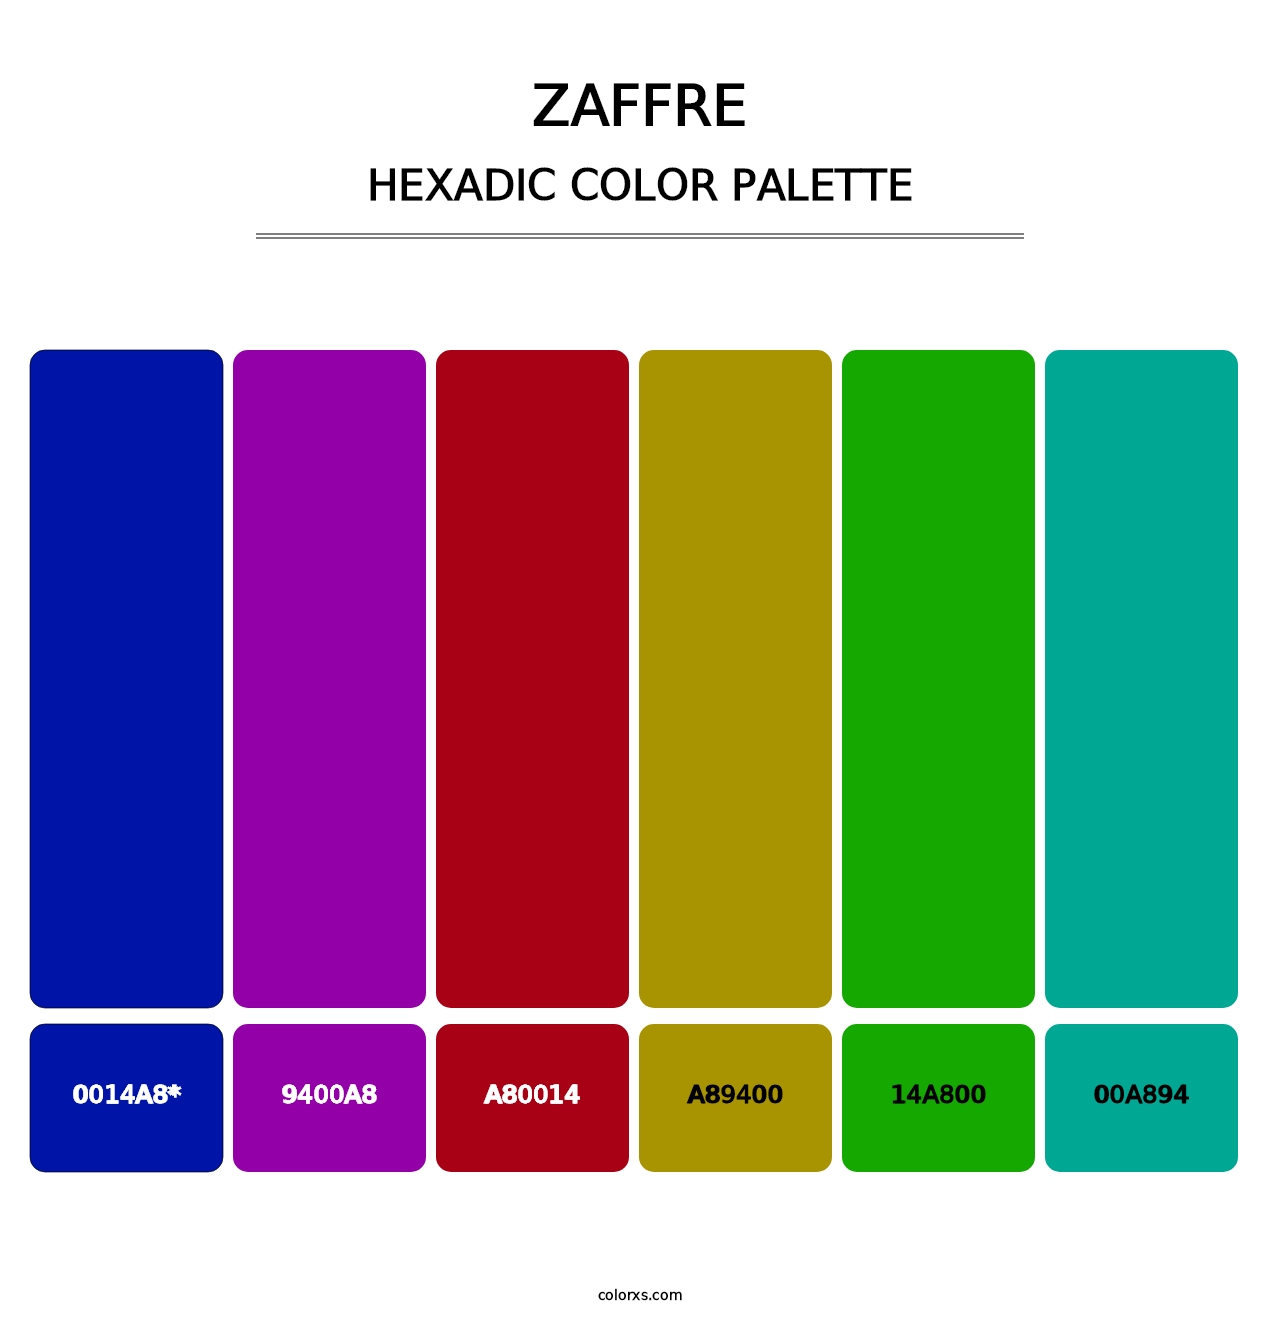 Zaffre - Hexadic Color Palette